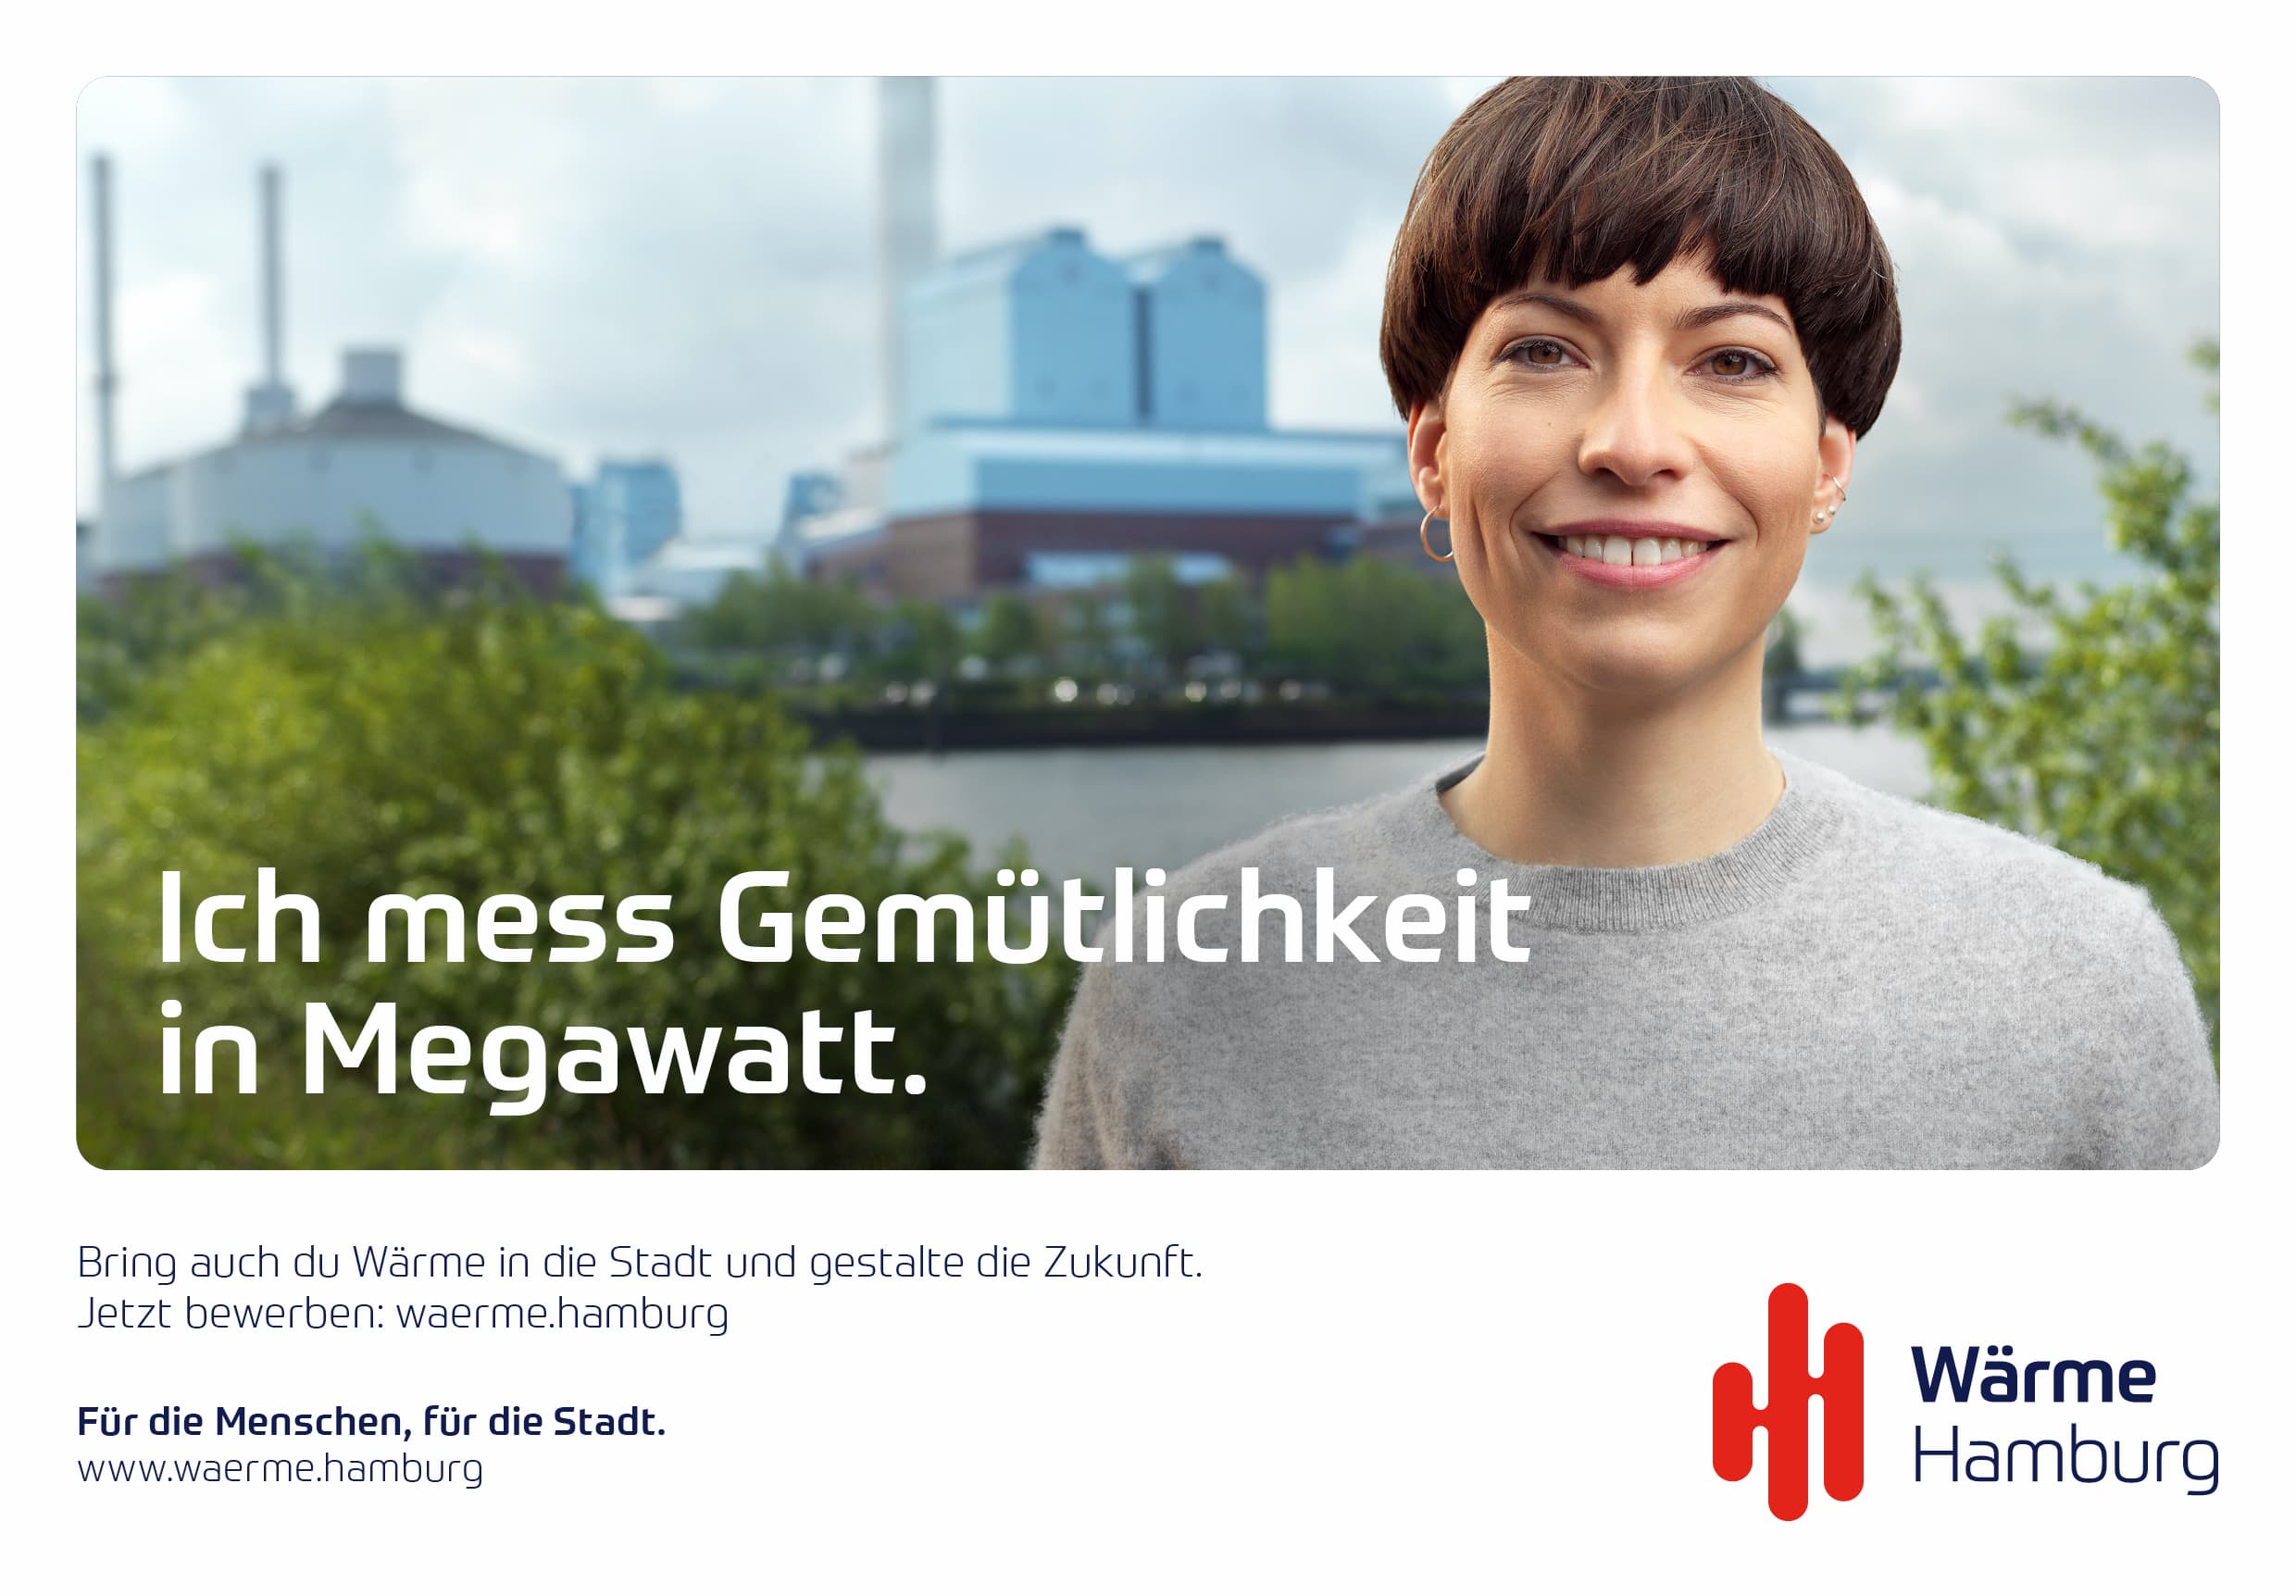 Wärme Hamburg - Communication & Recruiting Campaign